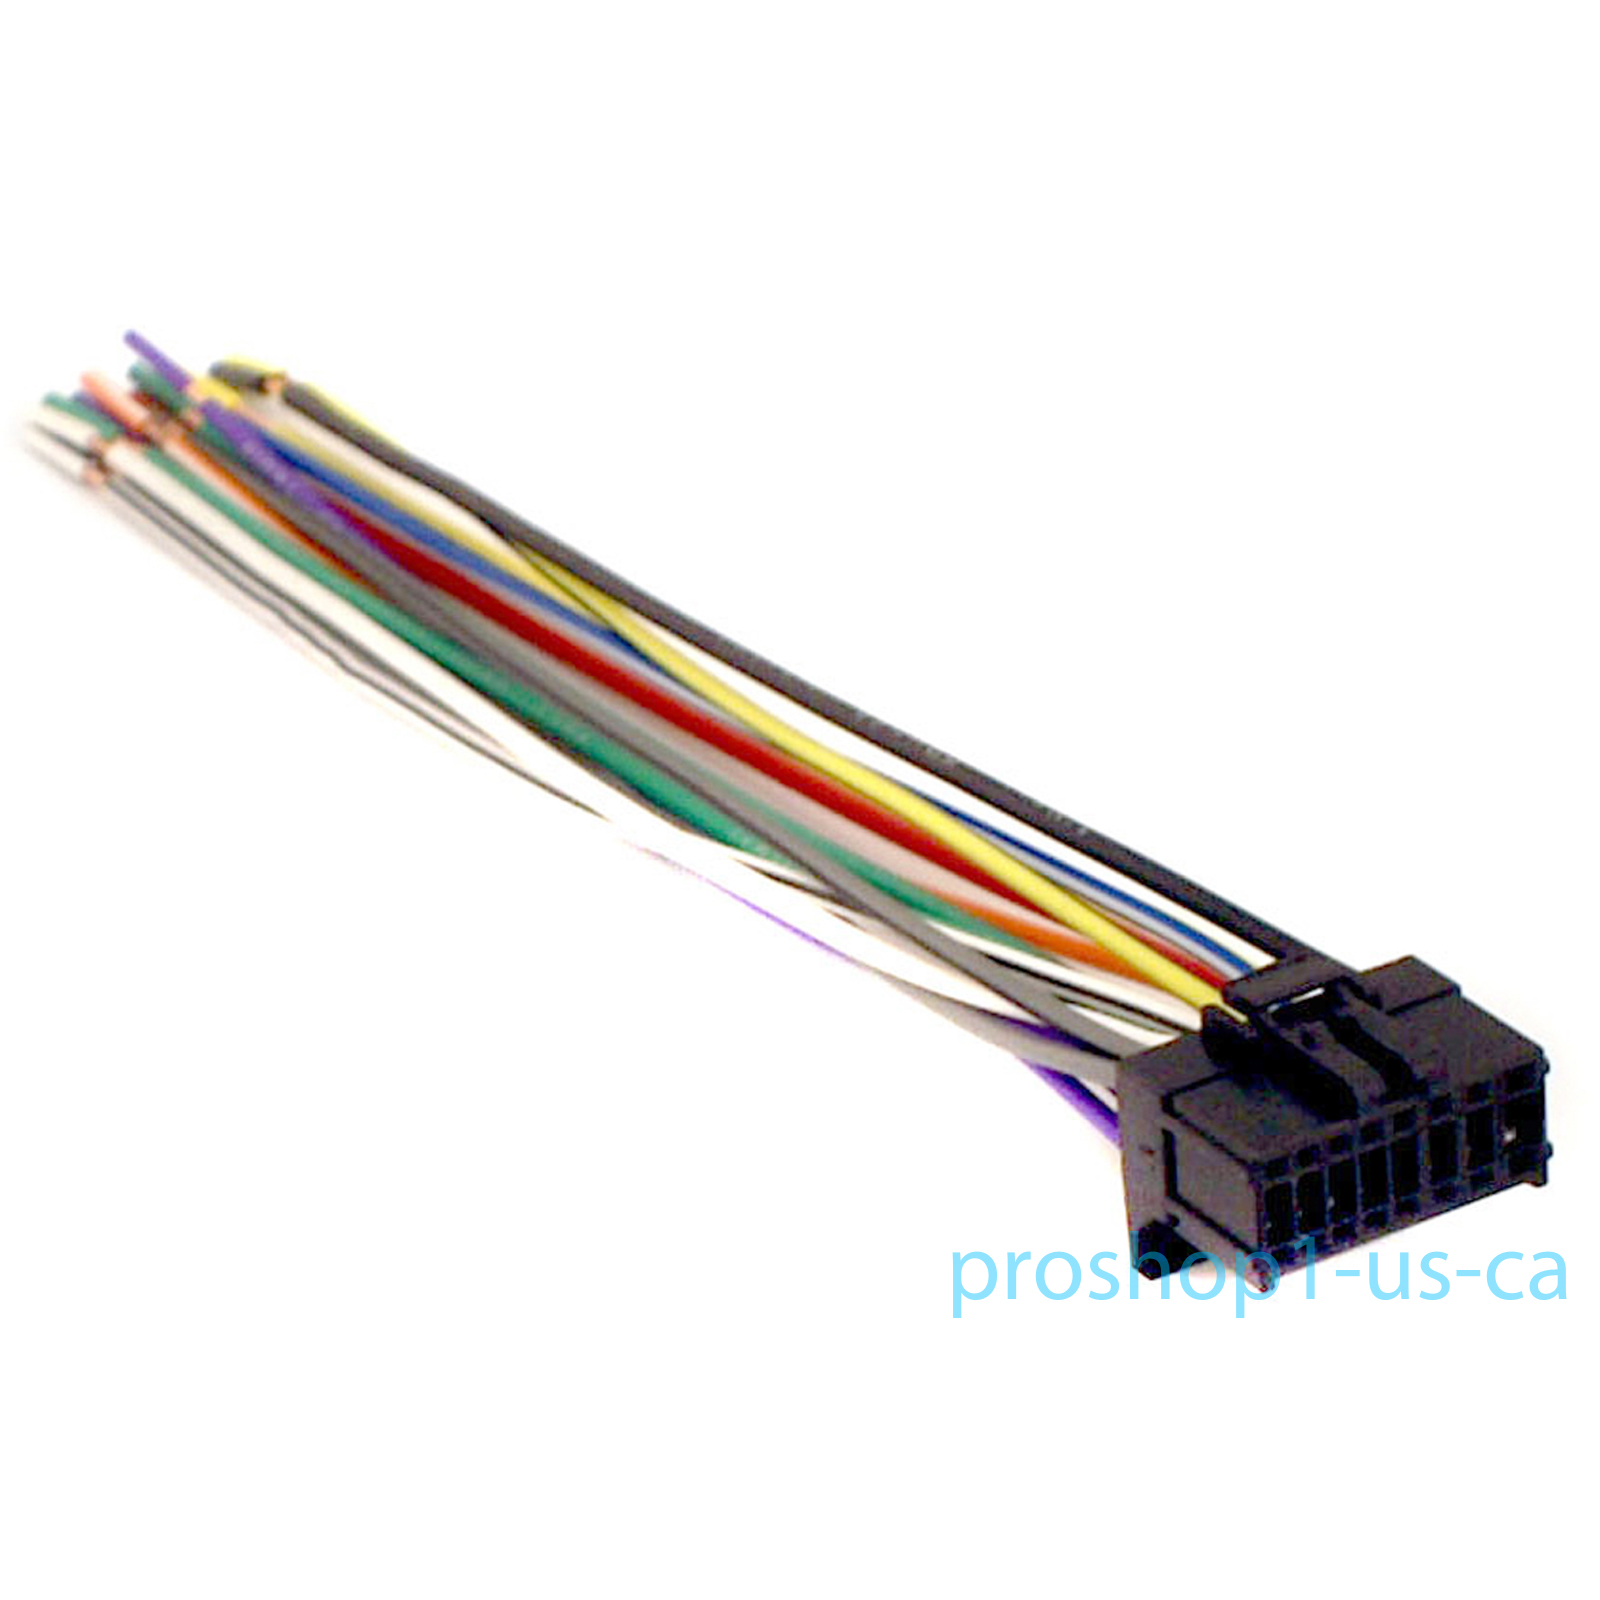 pioneer deh-p7500mp wiring diagram